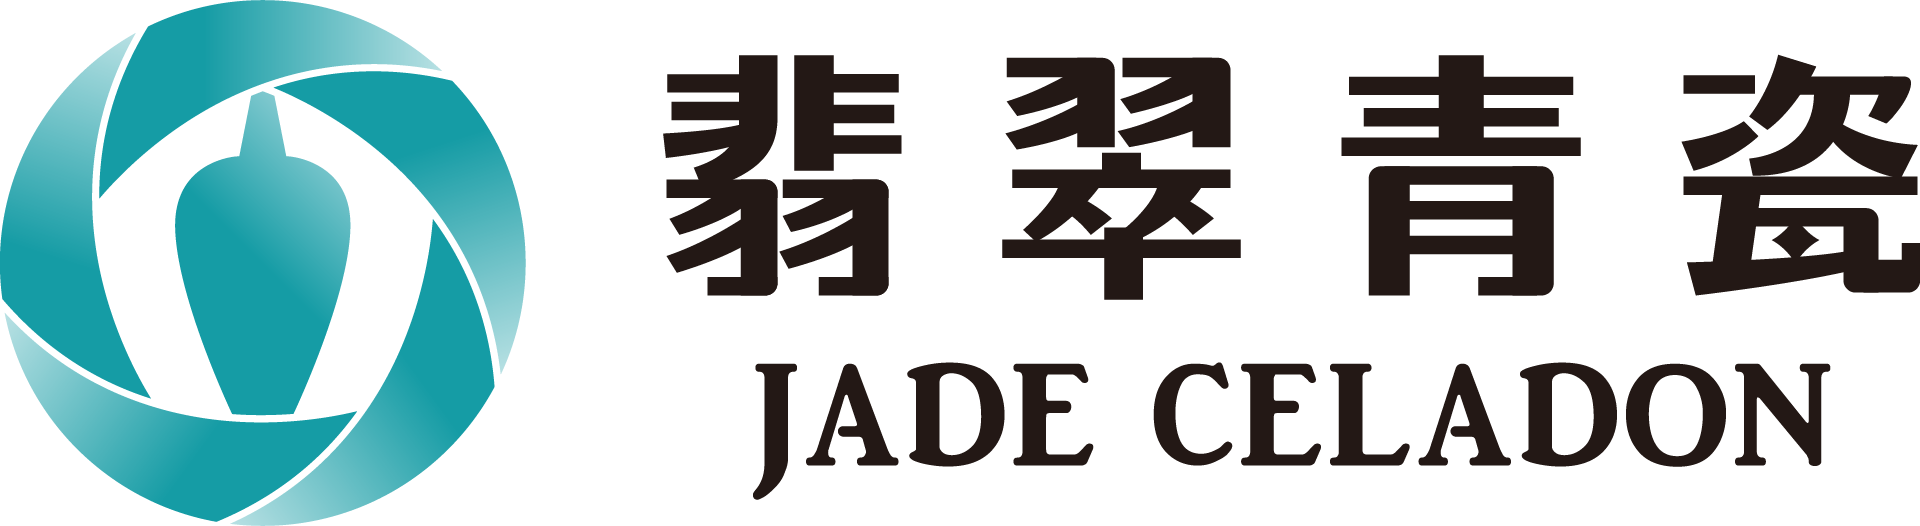 values projects jadeceladon typography 004